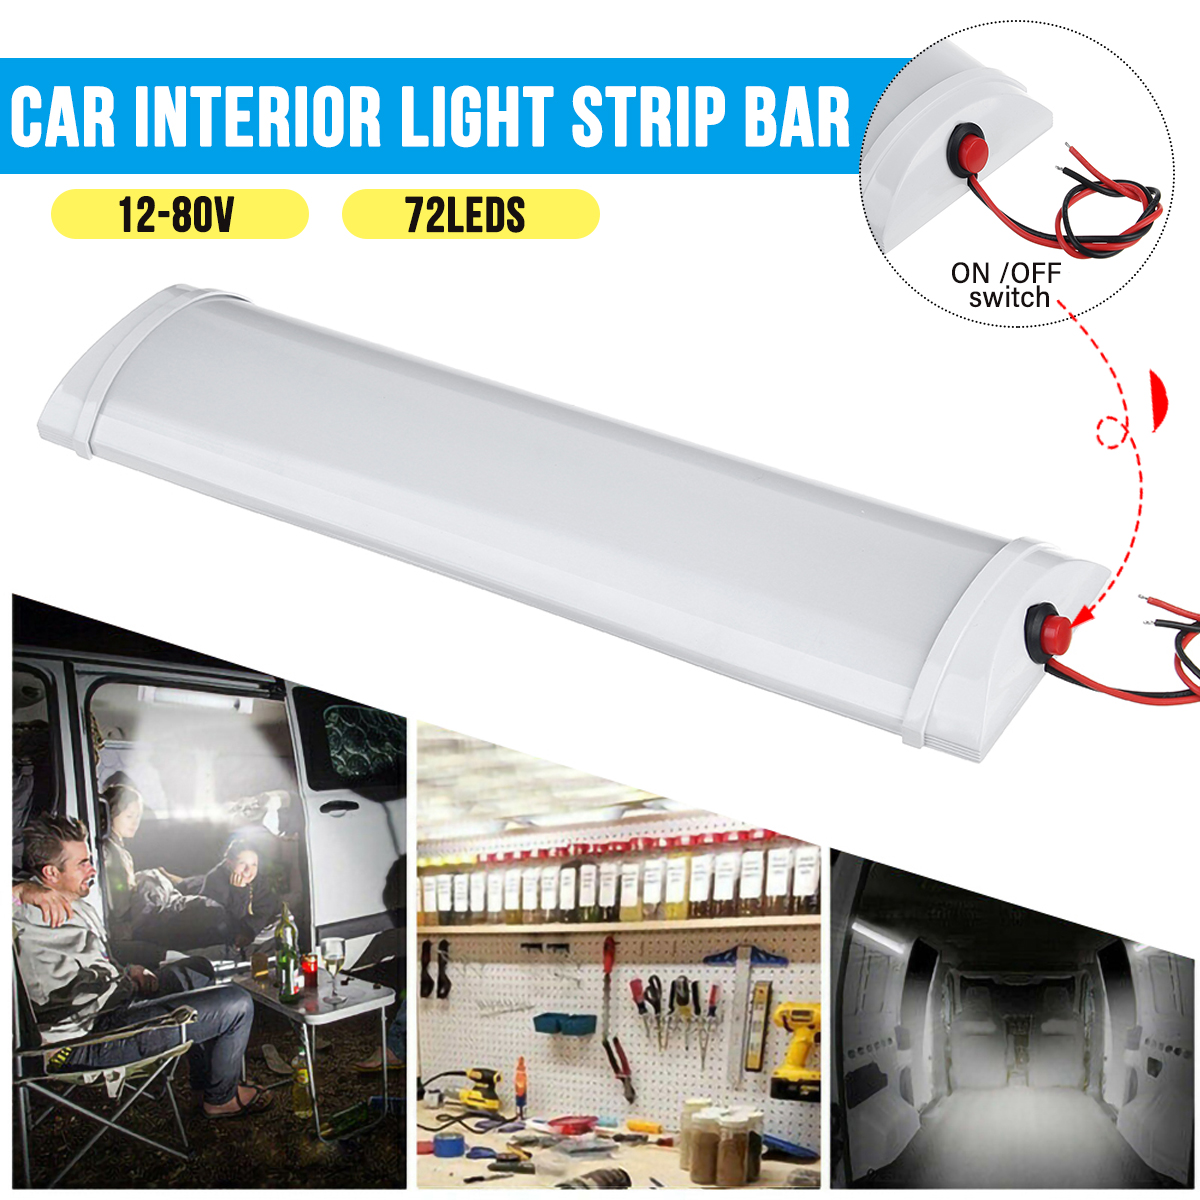 12V-80V-28CM-LED-Car-Interior-Light-Strip-Bar-Van-Bus-Caravan-Truck-ONOFF-Switch-1798969-1